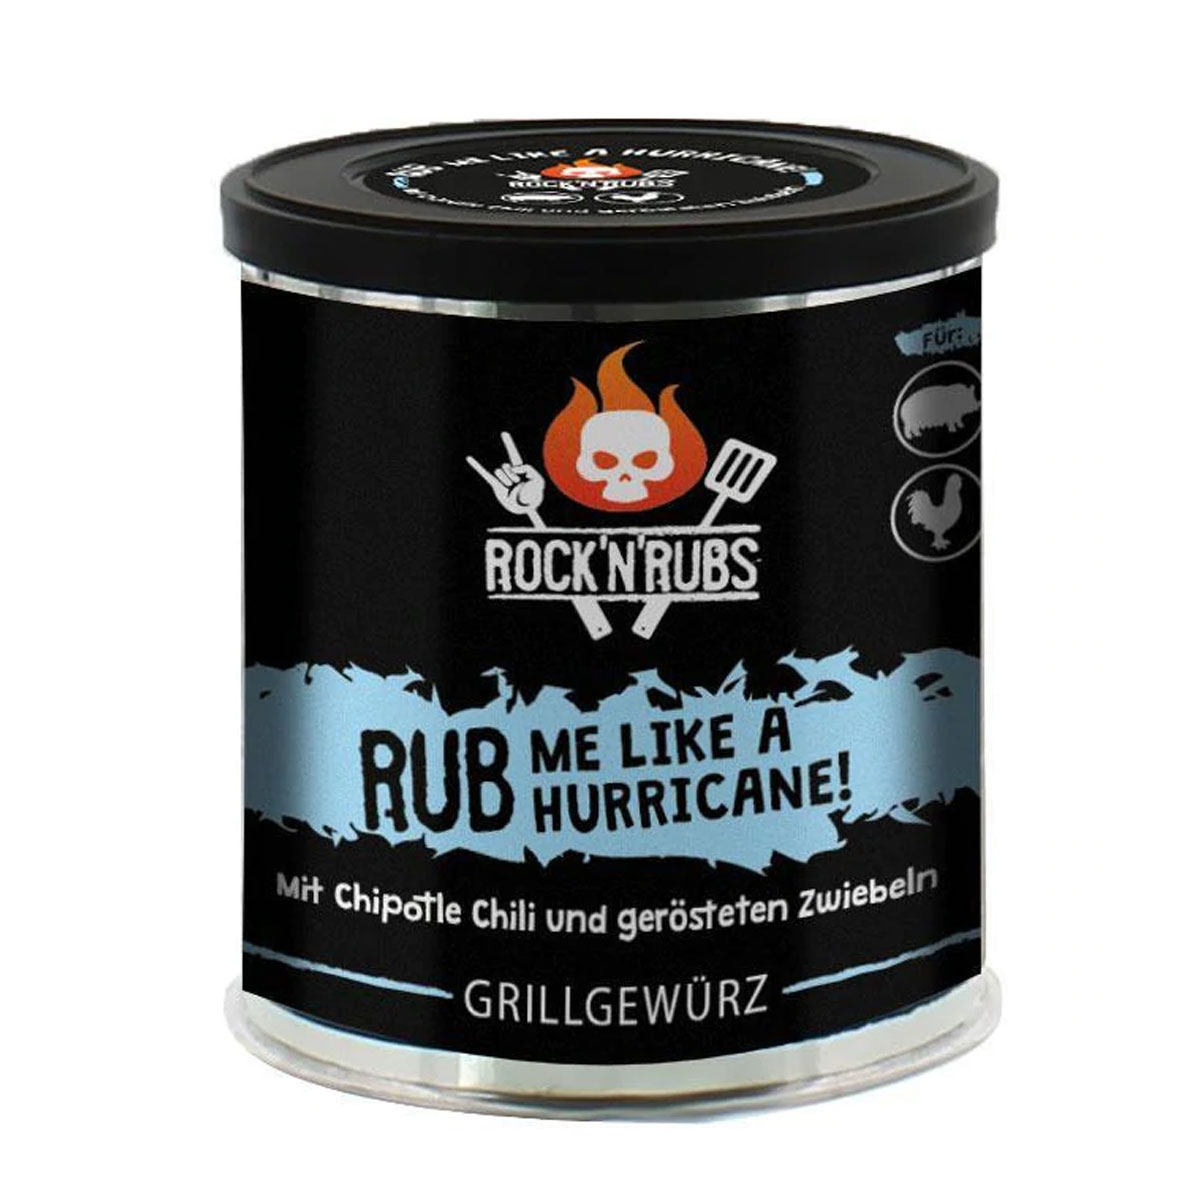 Rock'n'Rubs "Rub me like a Hurricane" Frontline Rub, 140g